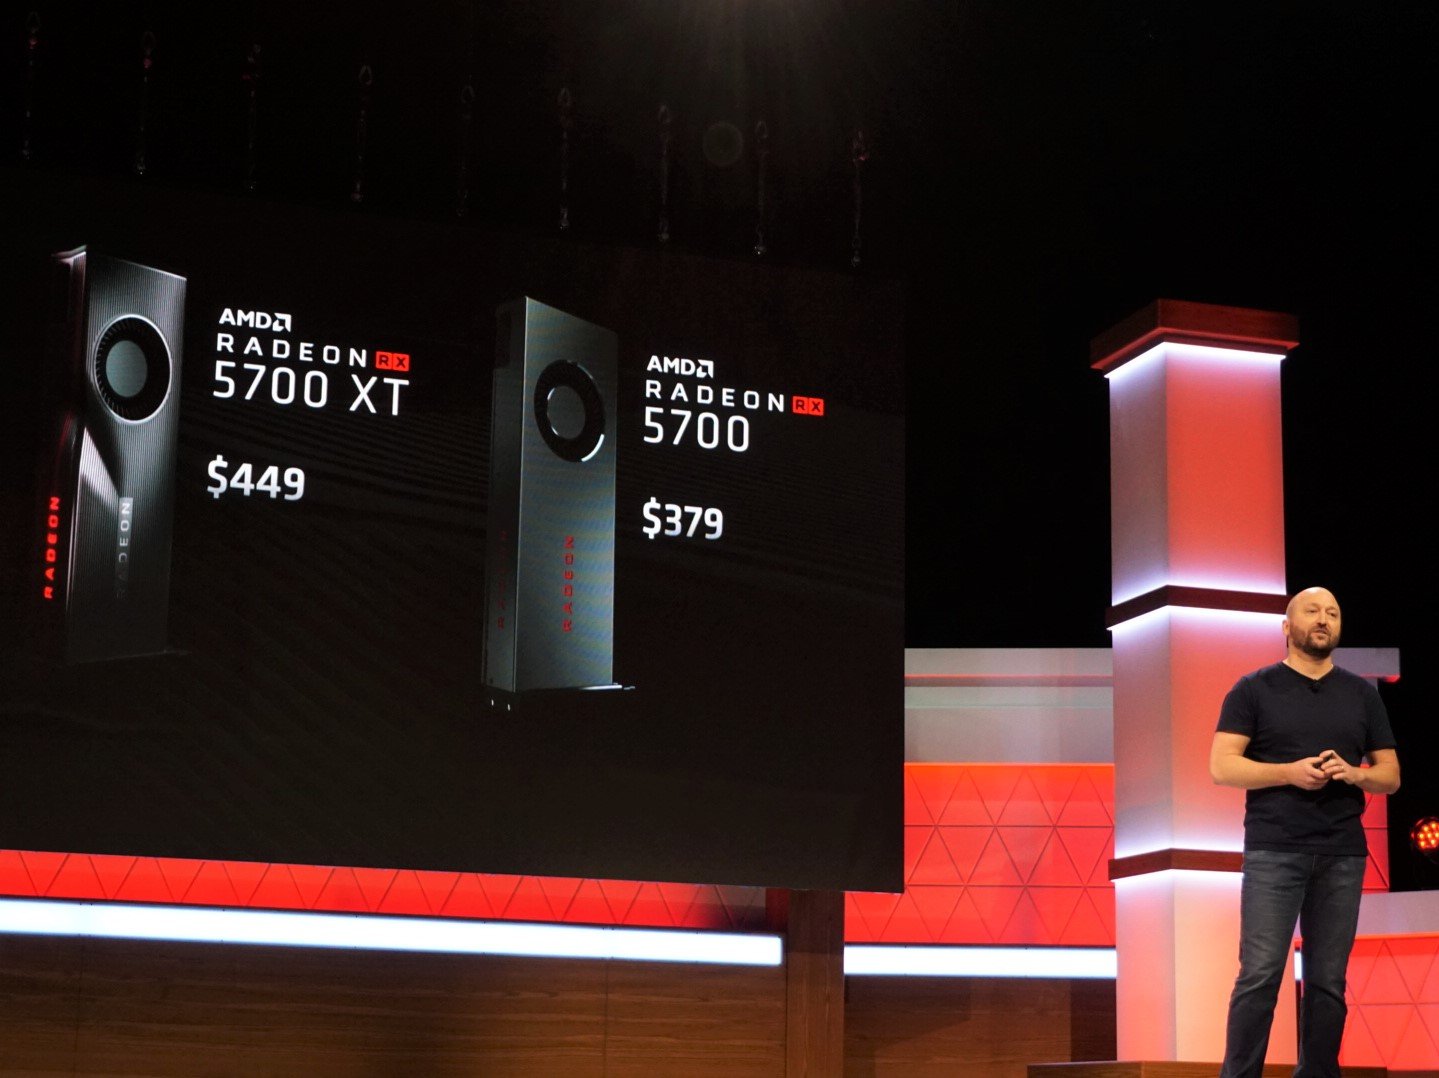 Radeon RX 5700 pricing